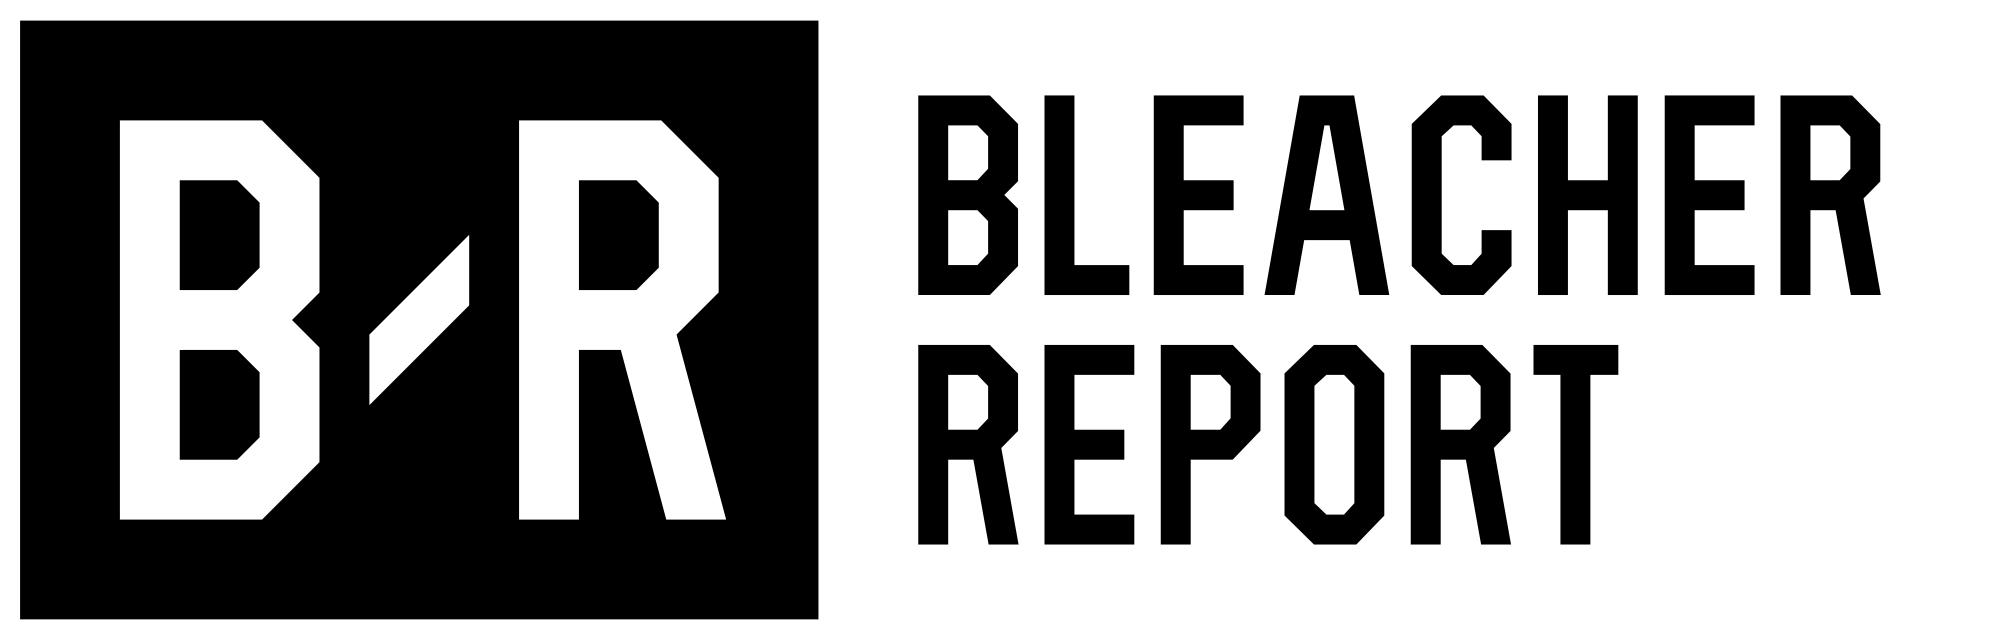 Report Logo - File:Bleacher Report logo.svg - Wikimedia Commons